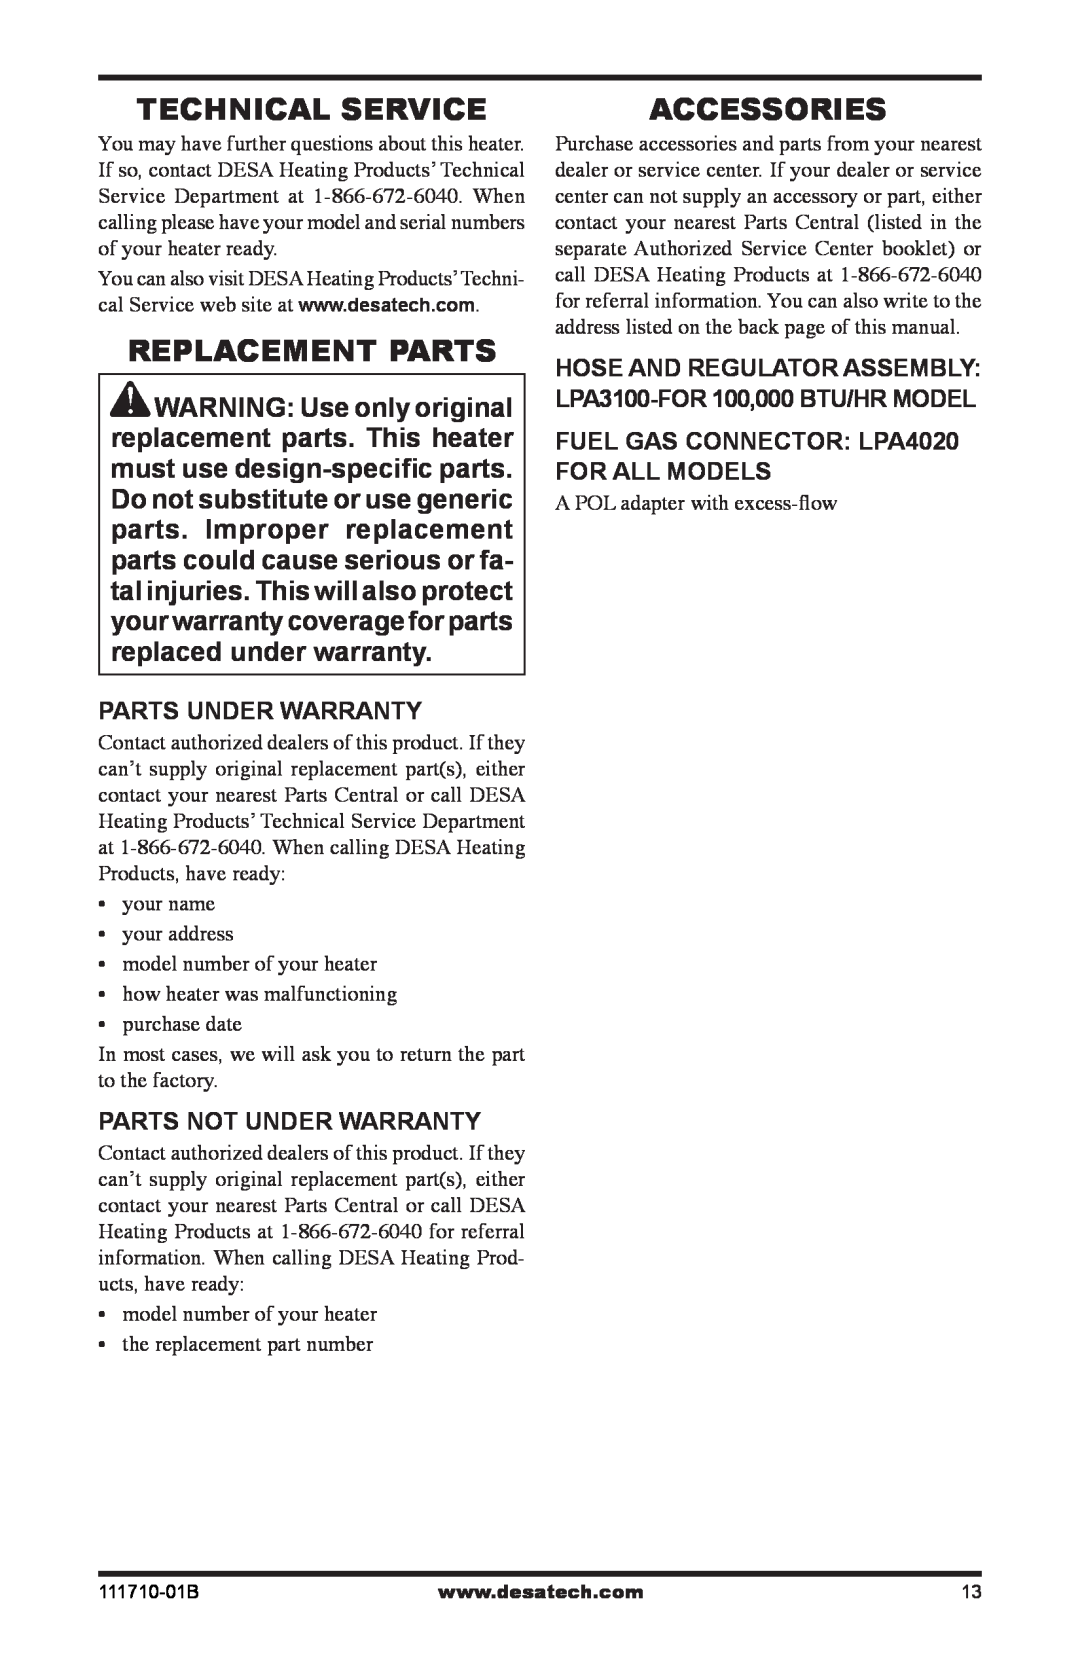 Desa RLP100 owner manual Technical Service, Replacement Parts, Accessories, Parts Under Warranty, Parts Not Under Warranty 